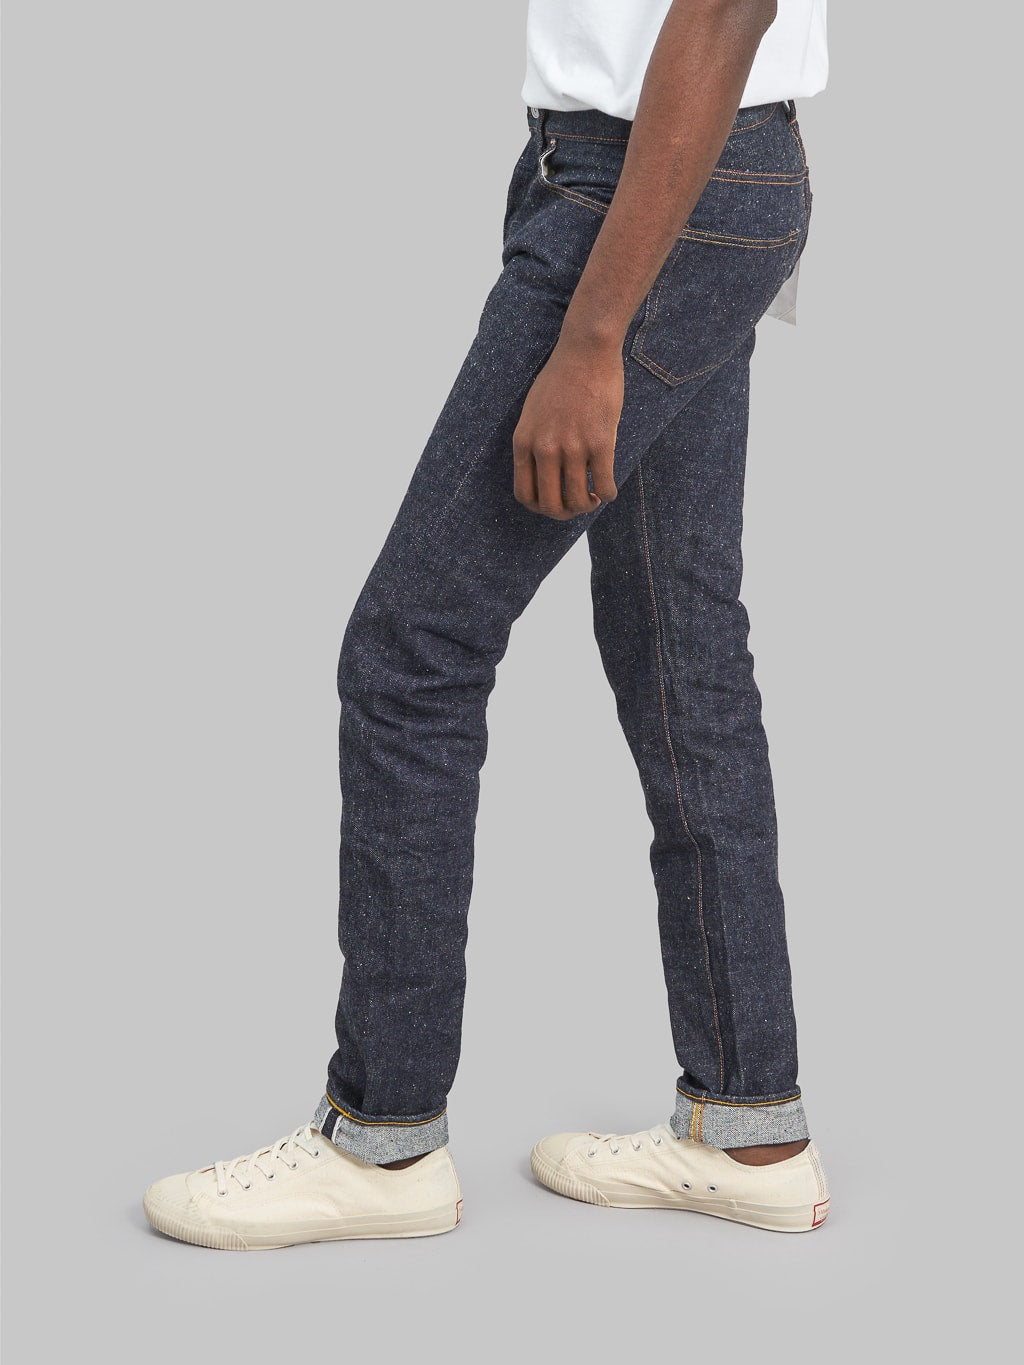 Samurai Jeans S0255XX Ushiwaka 15oz Slim Tapered jeans back fit